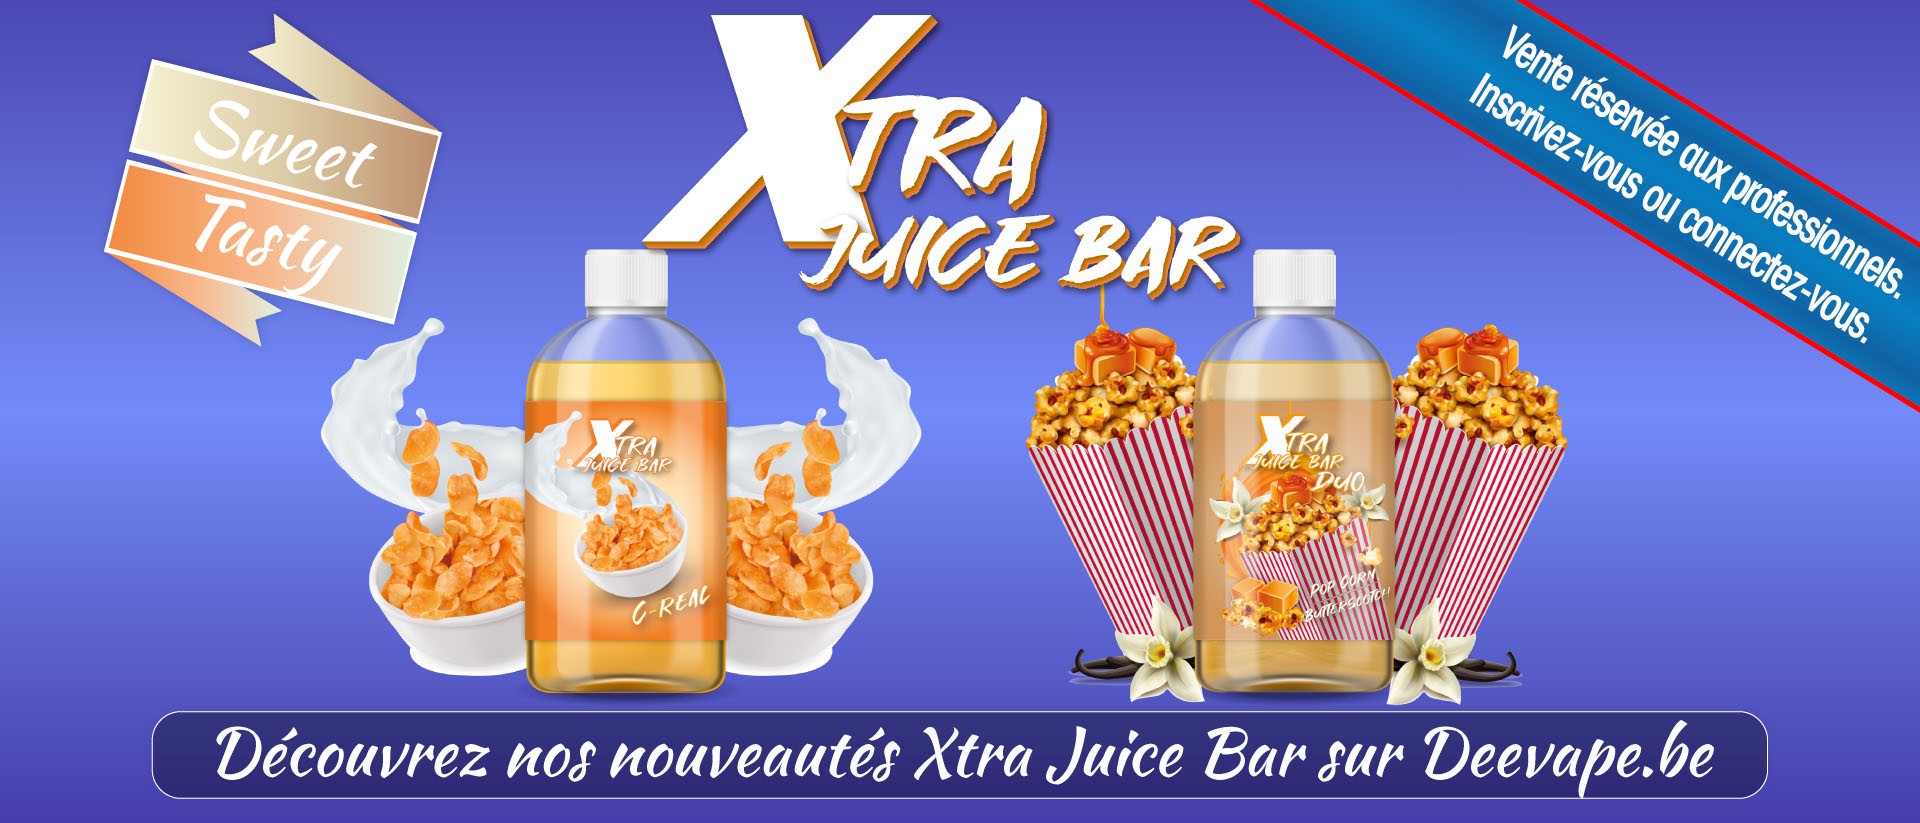 XTRA JUICE BAR - PopCorn/Butterscotch - C-Real